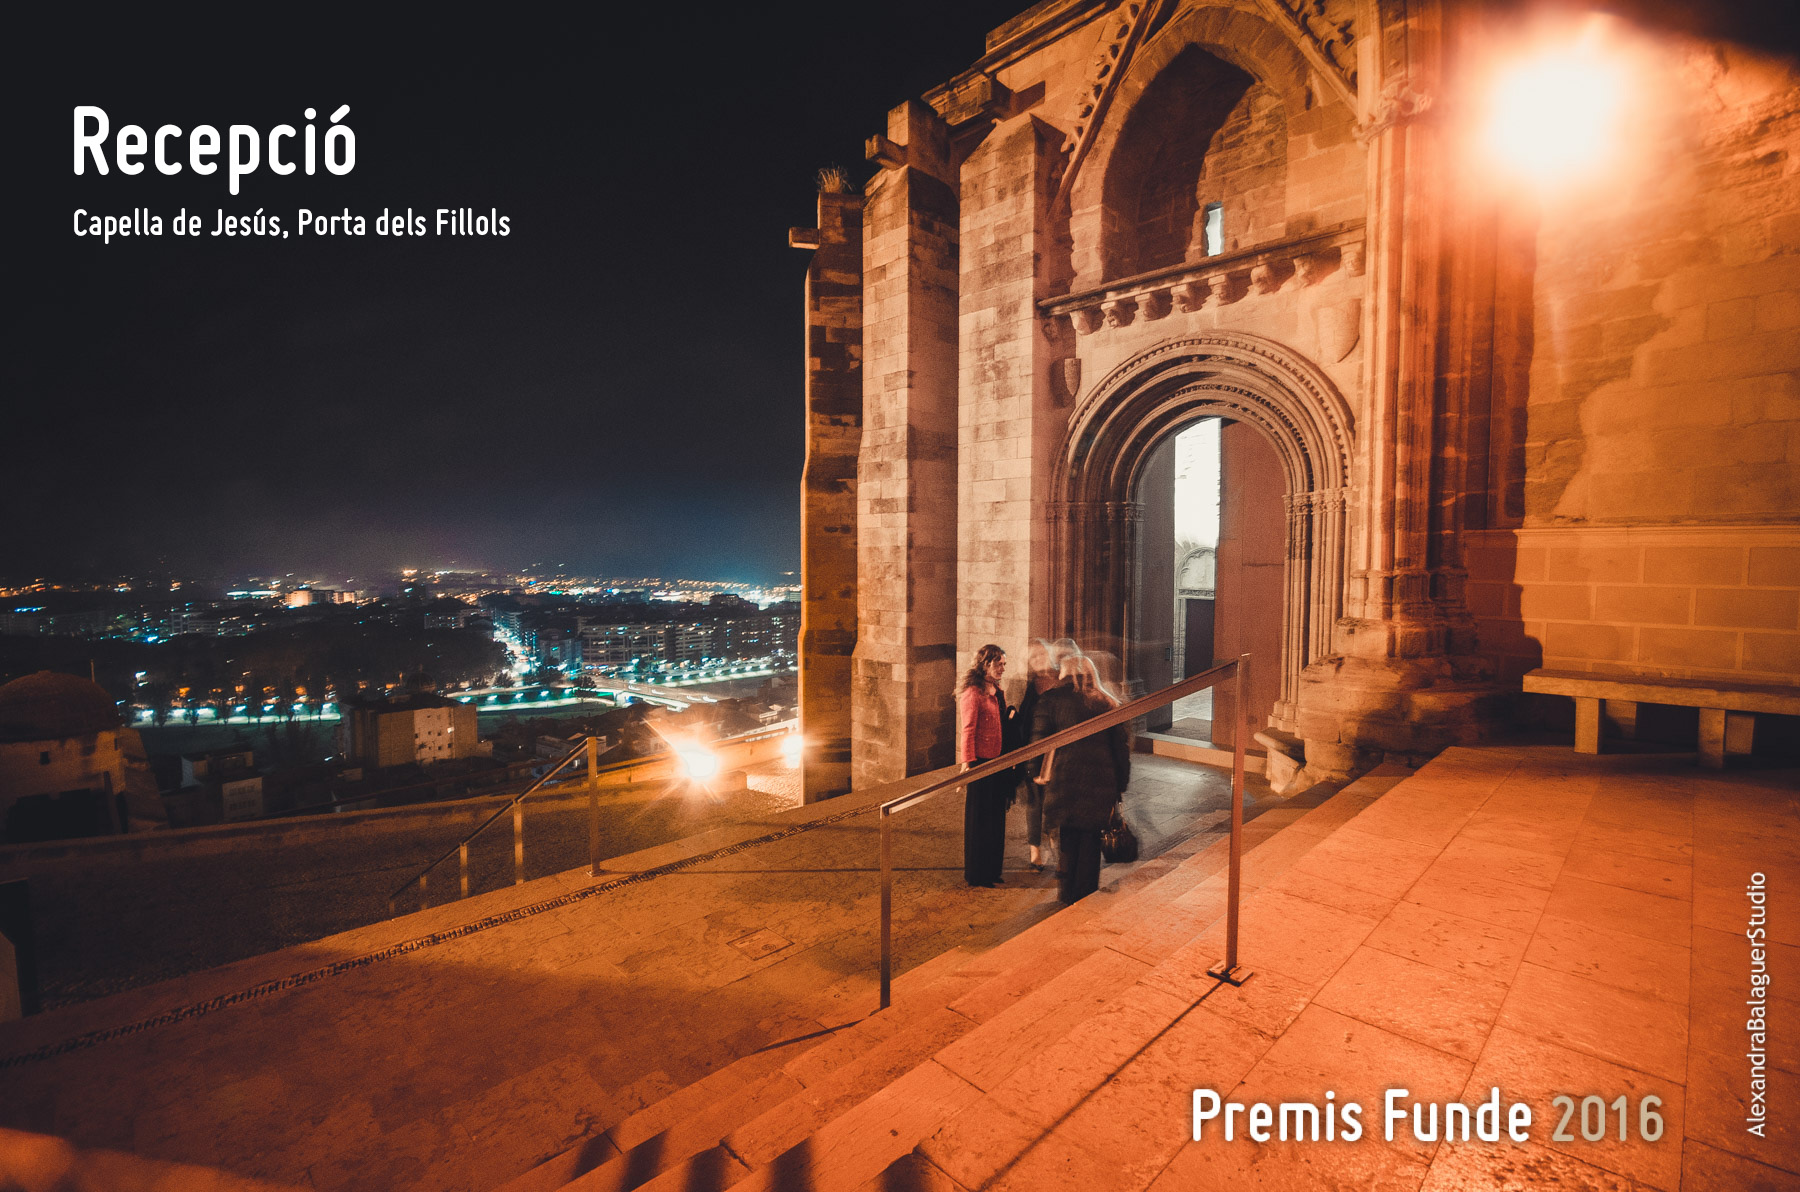 Premis Funde 2015